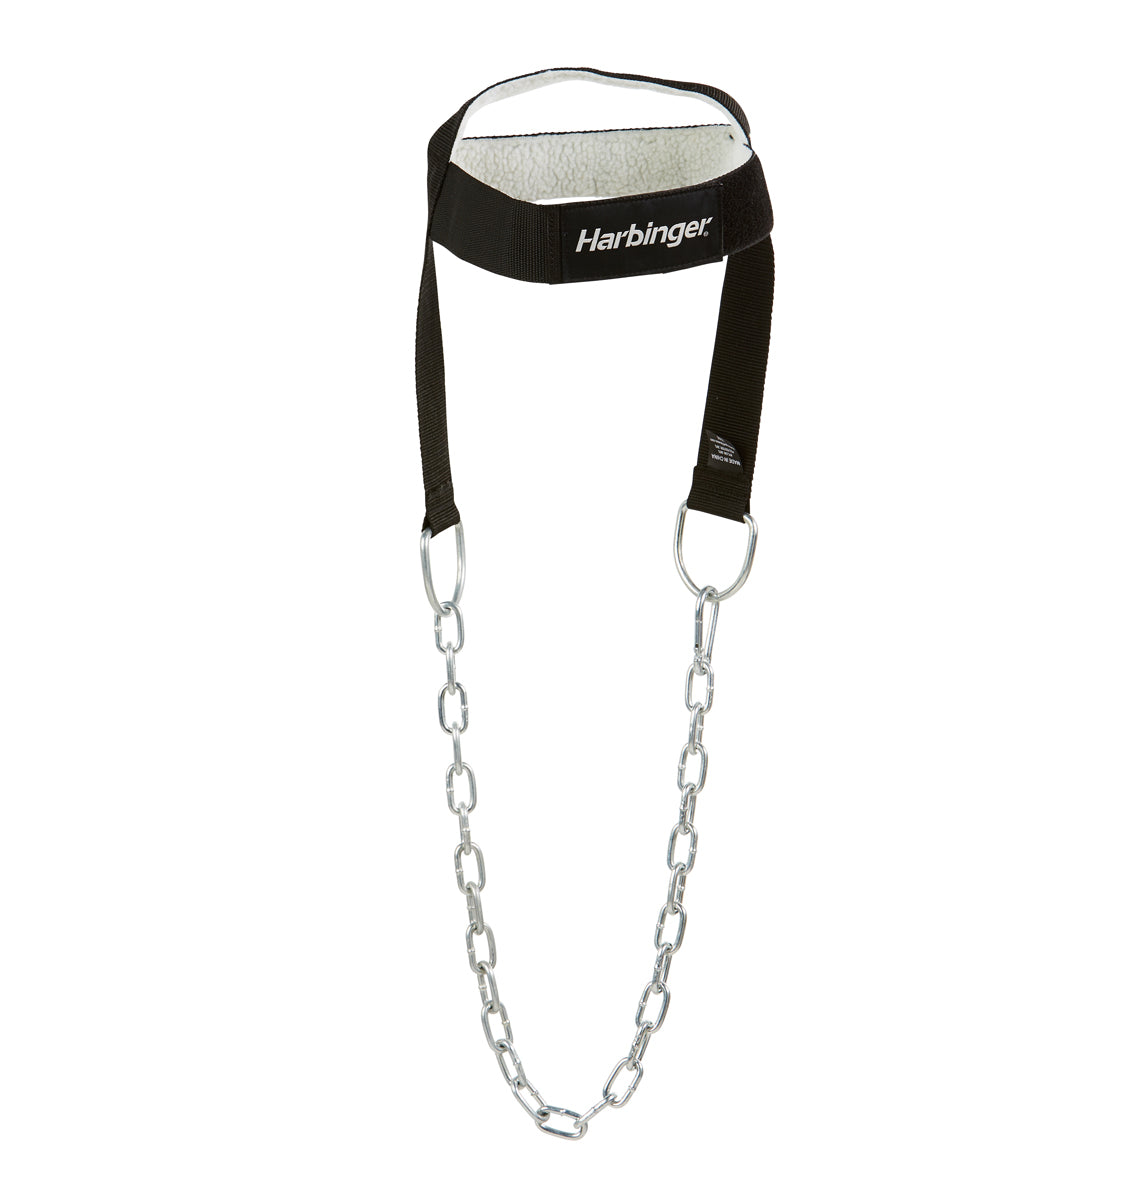 37320 Harbinger Nylon Head Harness with Chain Whole